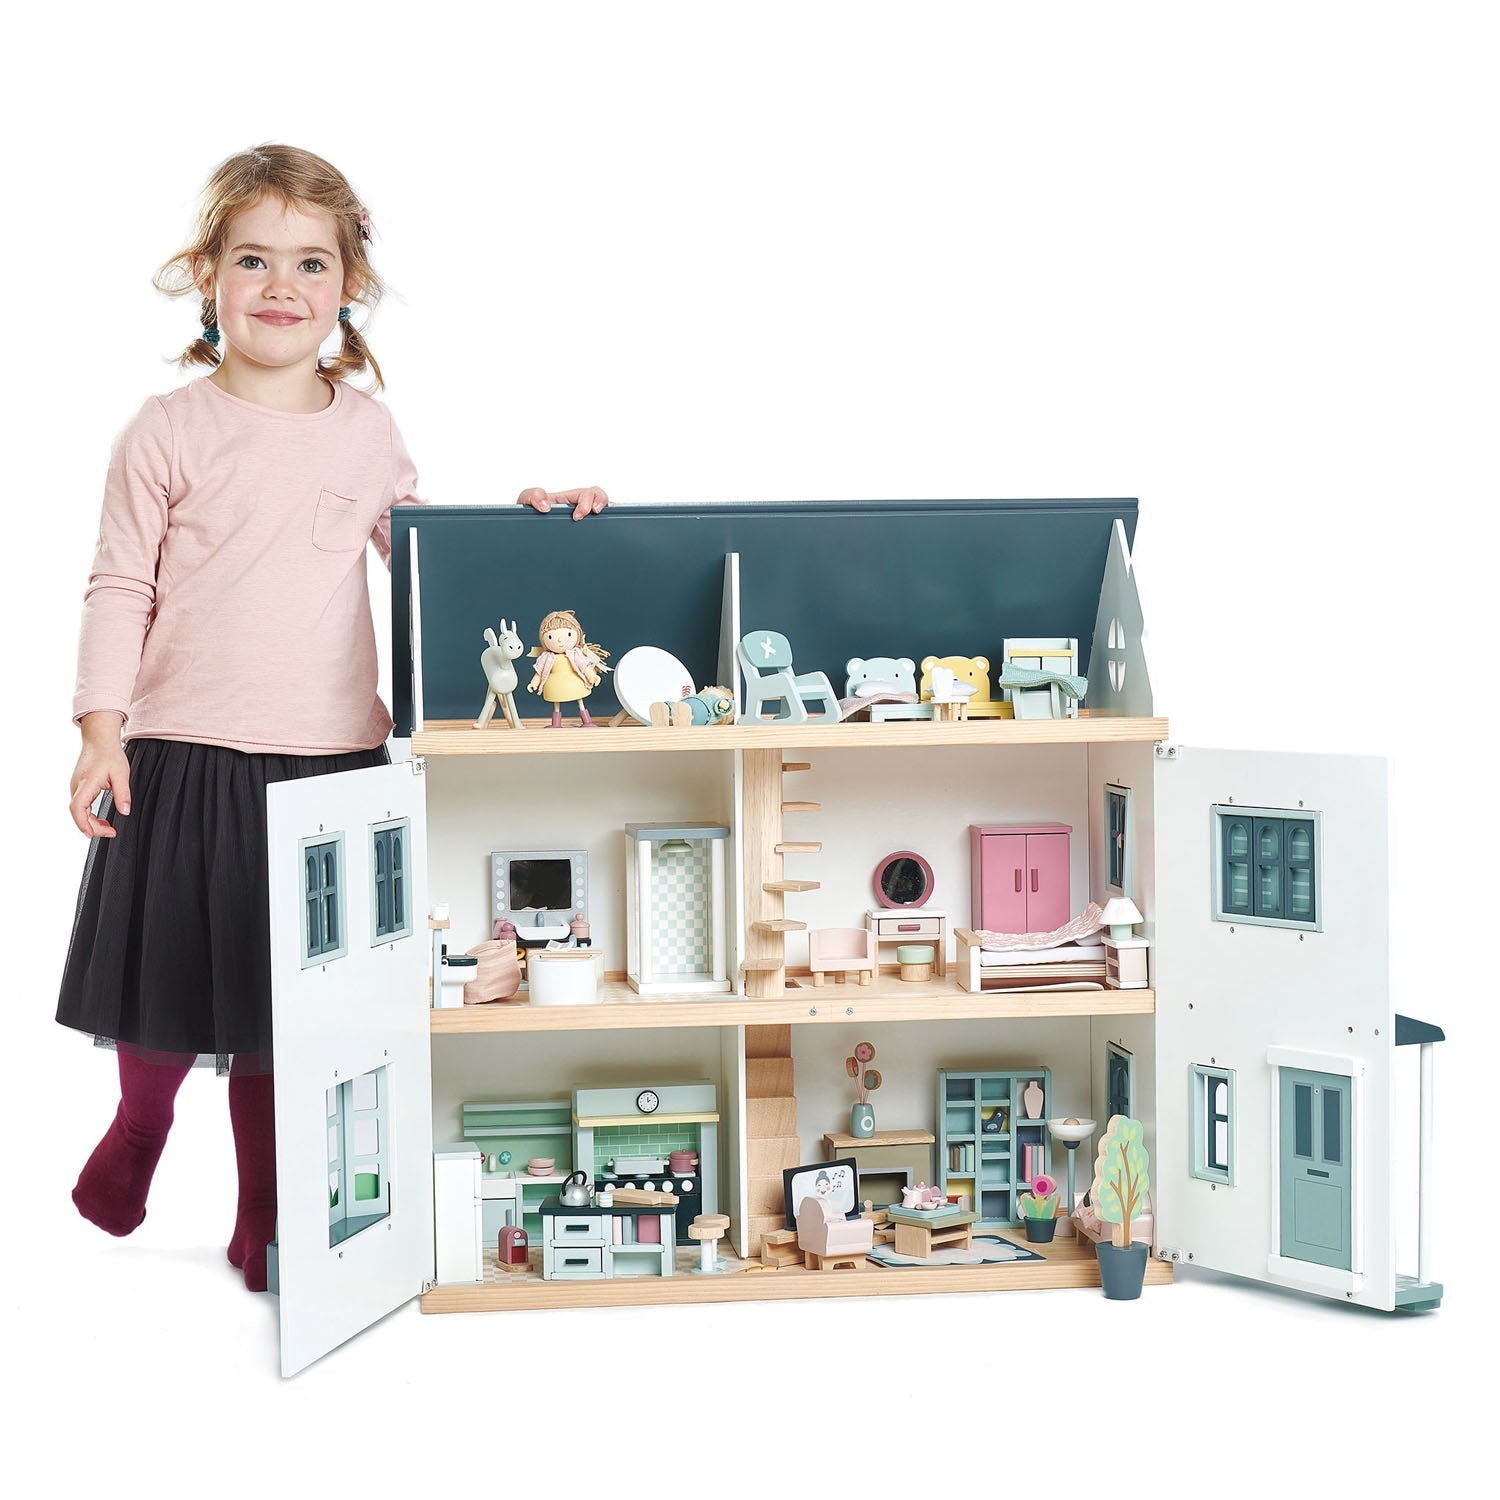 Dolls House Kitchen Furniture by Tender Leaf Toys